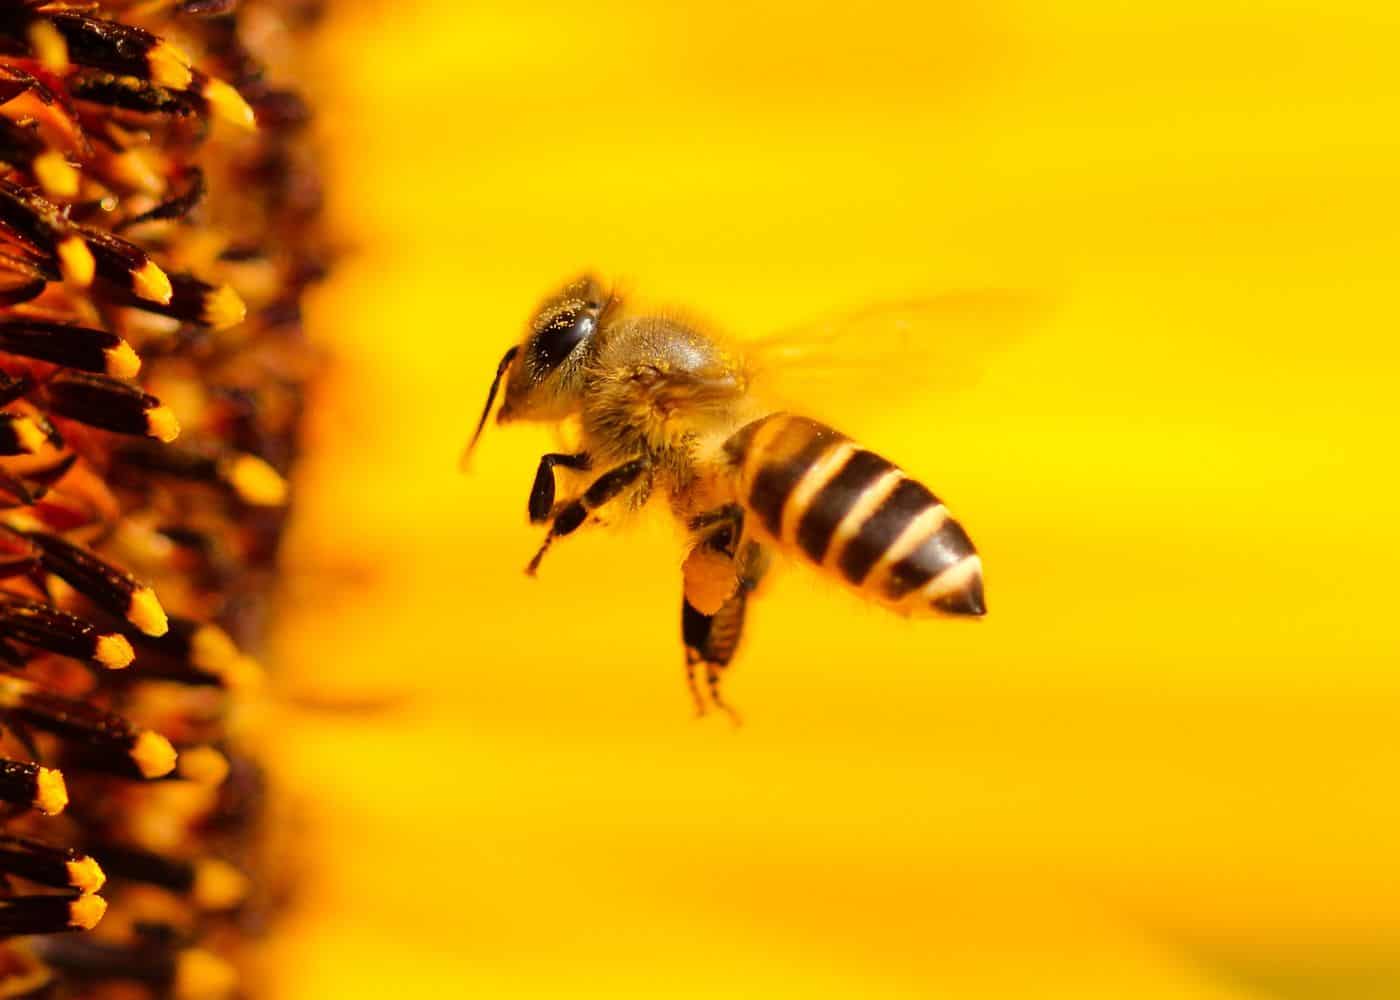 Sunflowers for pollinators - honey bees